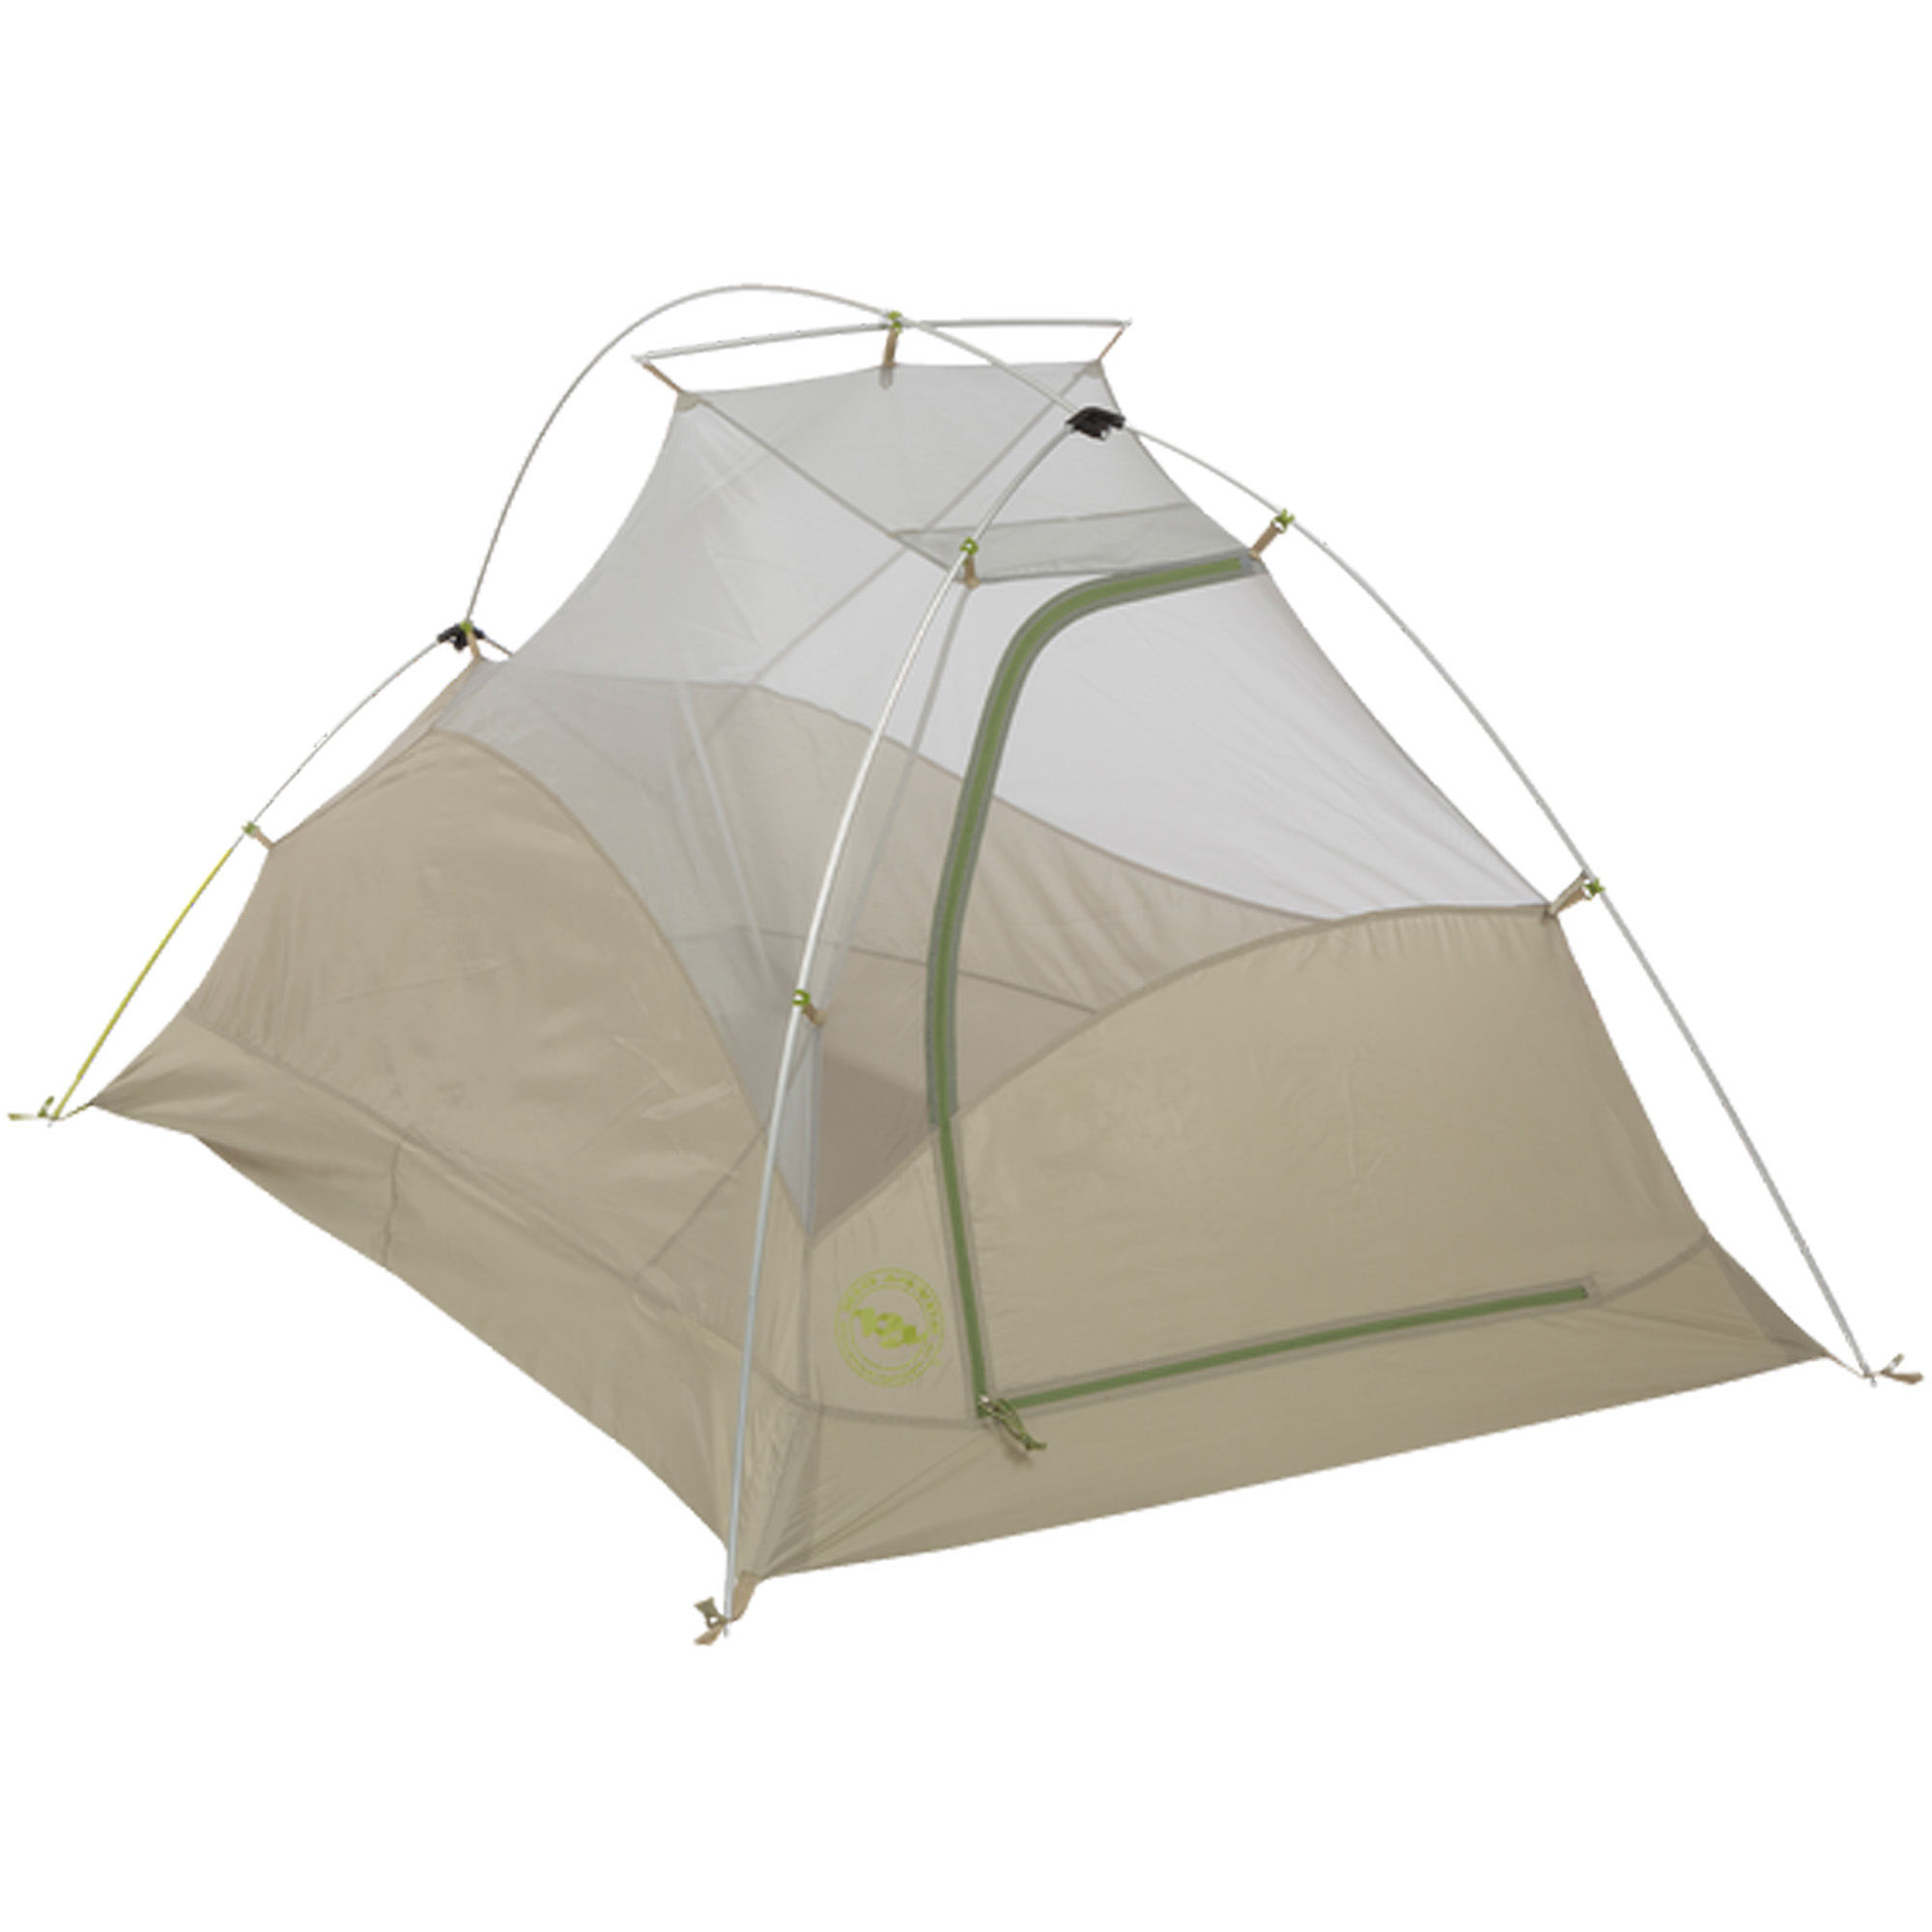 Big Agnes C-Bar 2 Lightweight Backpacking Tent